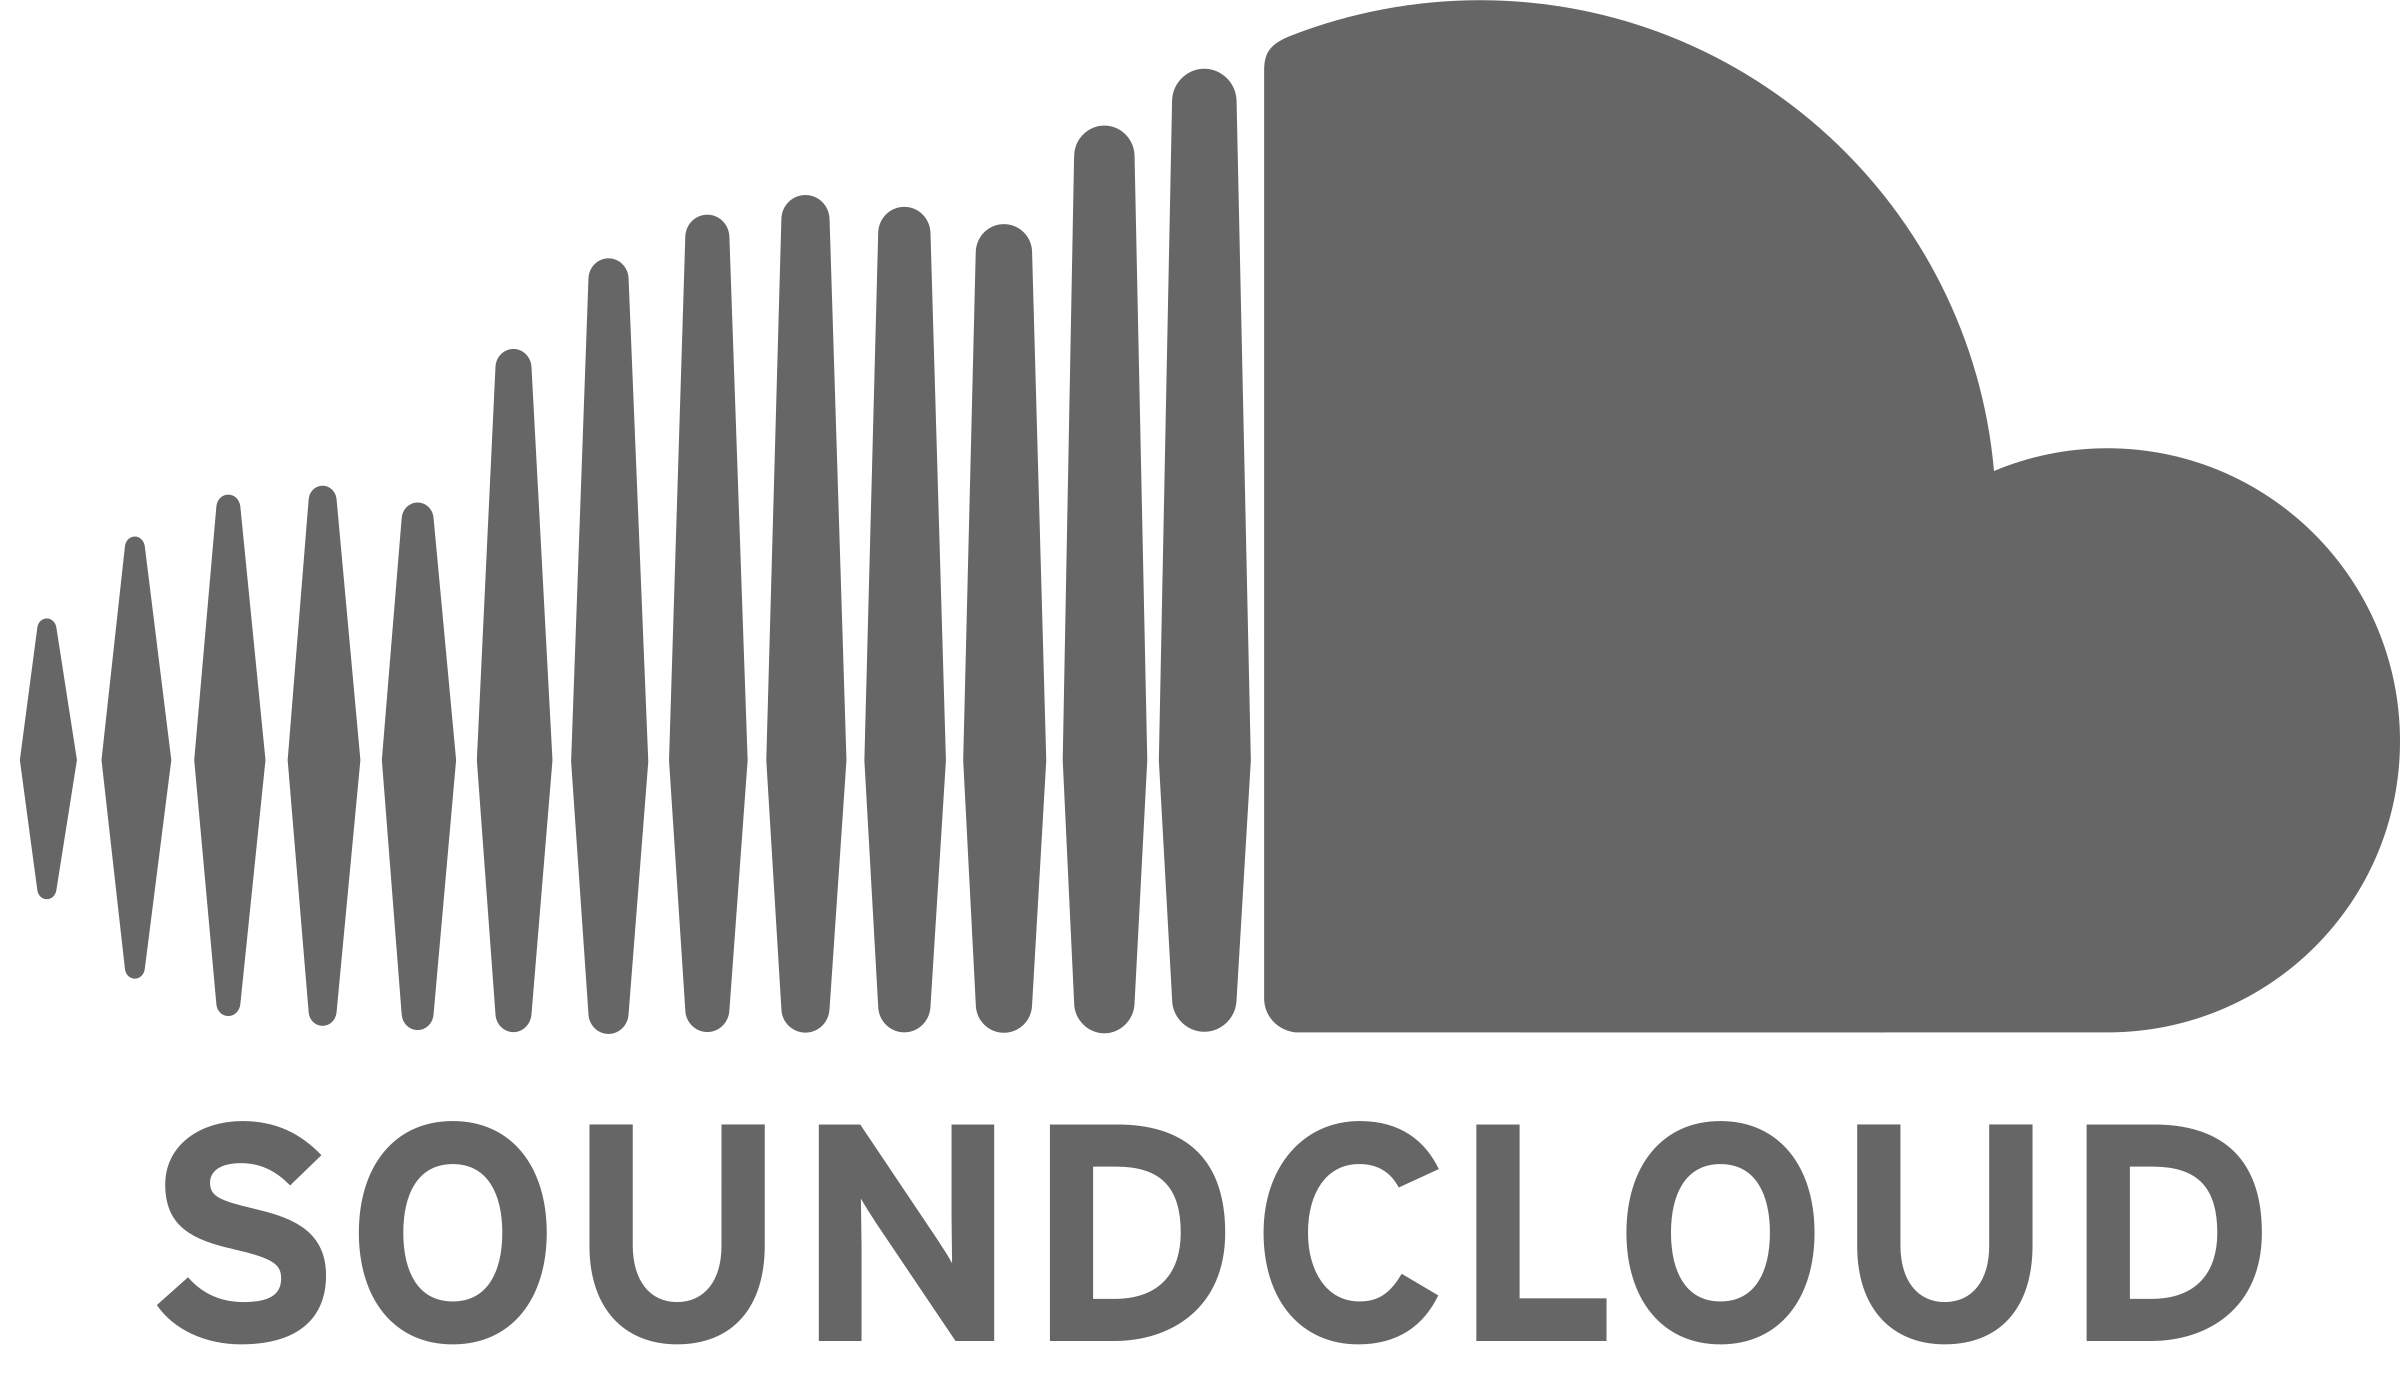 soundcloud logo png transparent svg vector bie supply #28199